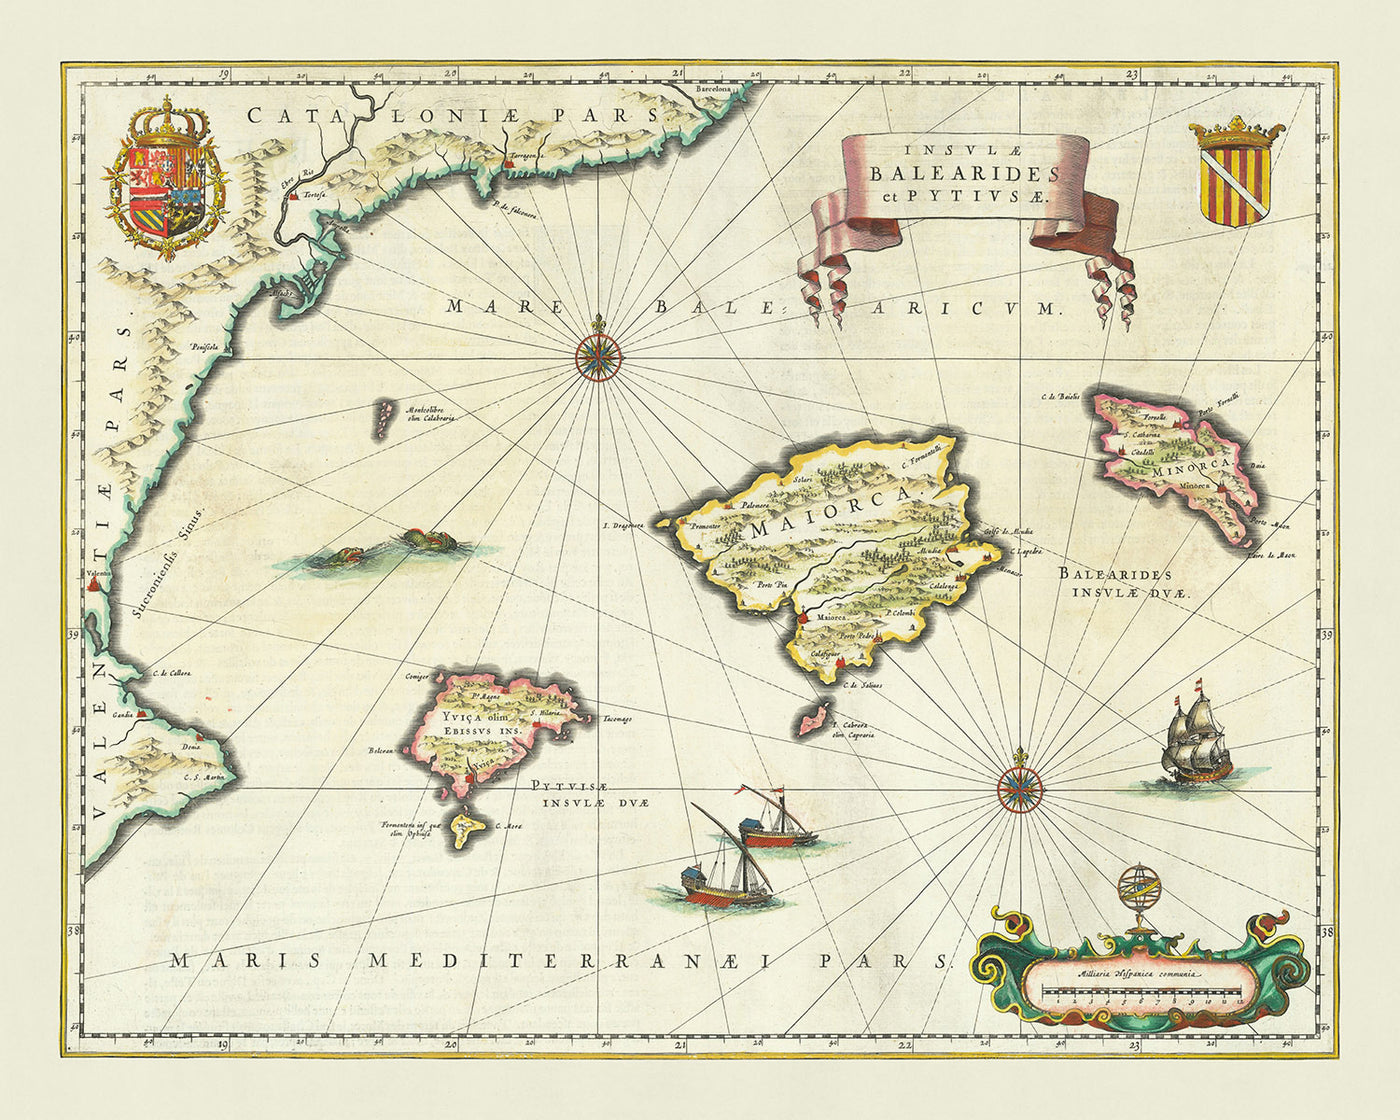 Alte Karte der Balearen, 1640: Mallorca, Menorca, Ibiza, katalanische Küste, Seeungeheuer